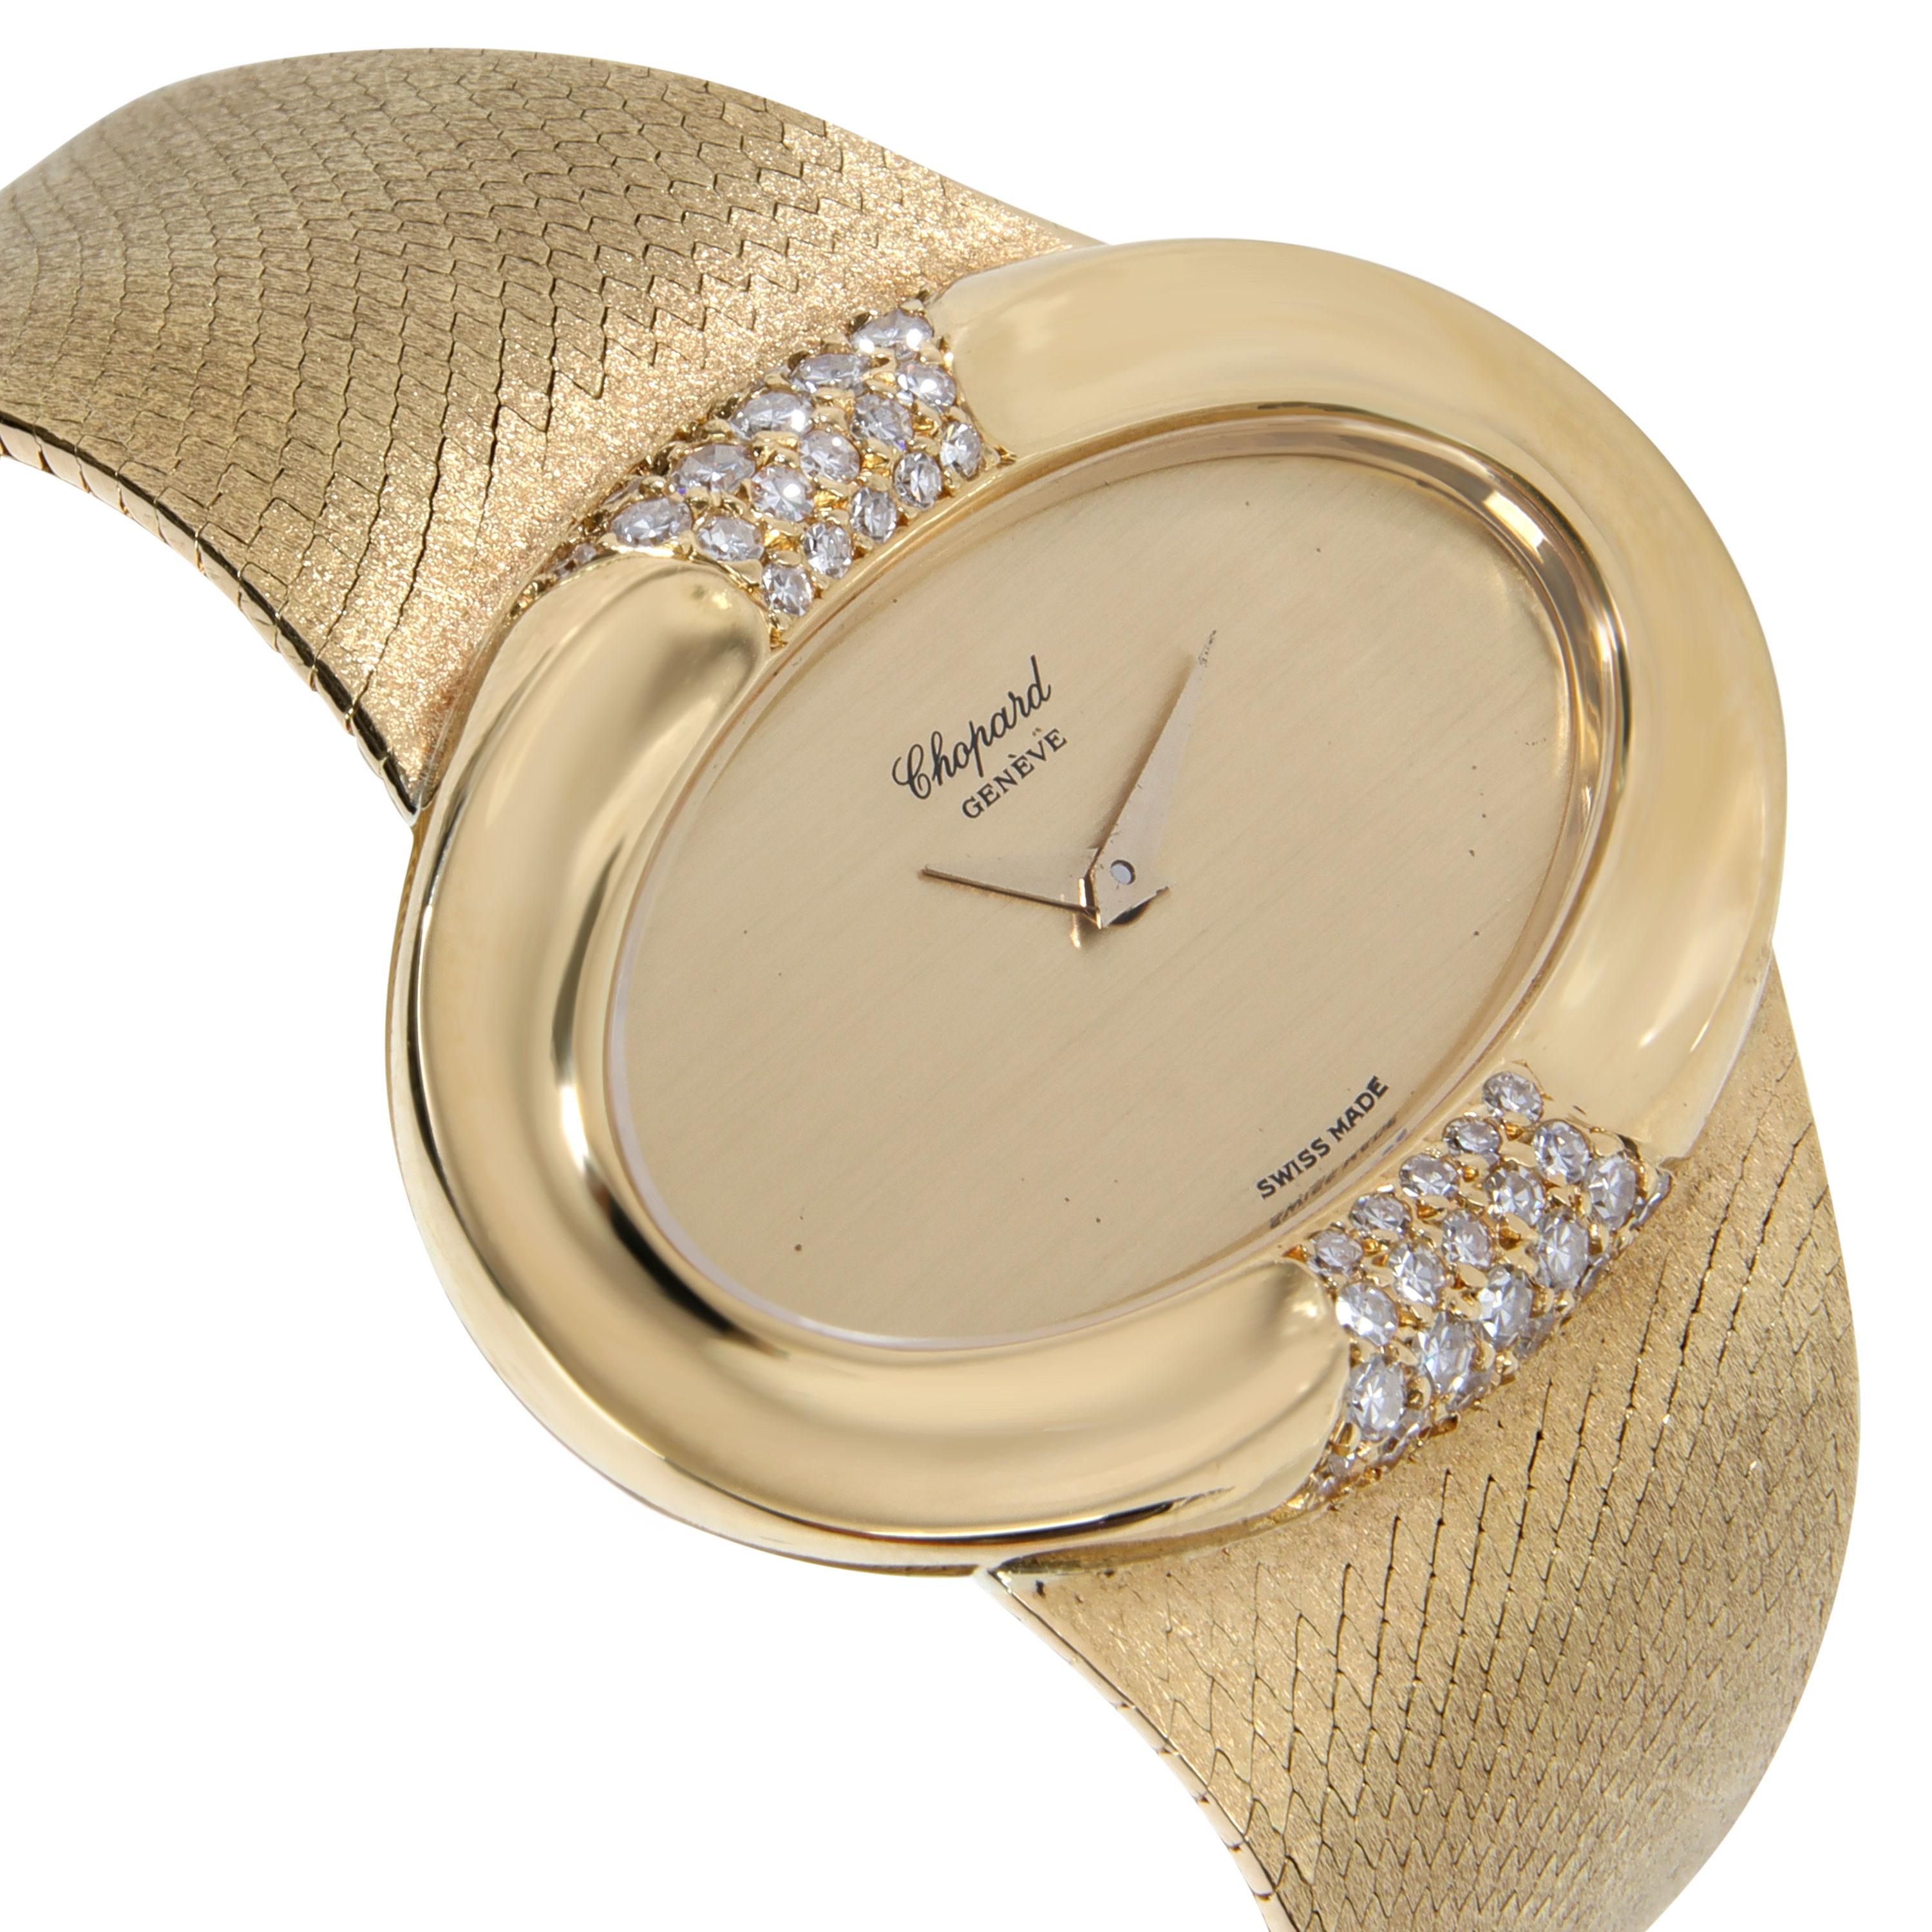 Chopard Dress 5047 1 Women's Watch in 18kt Yellow Gold 1